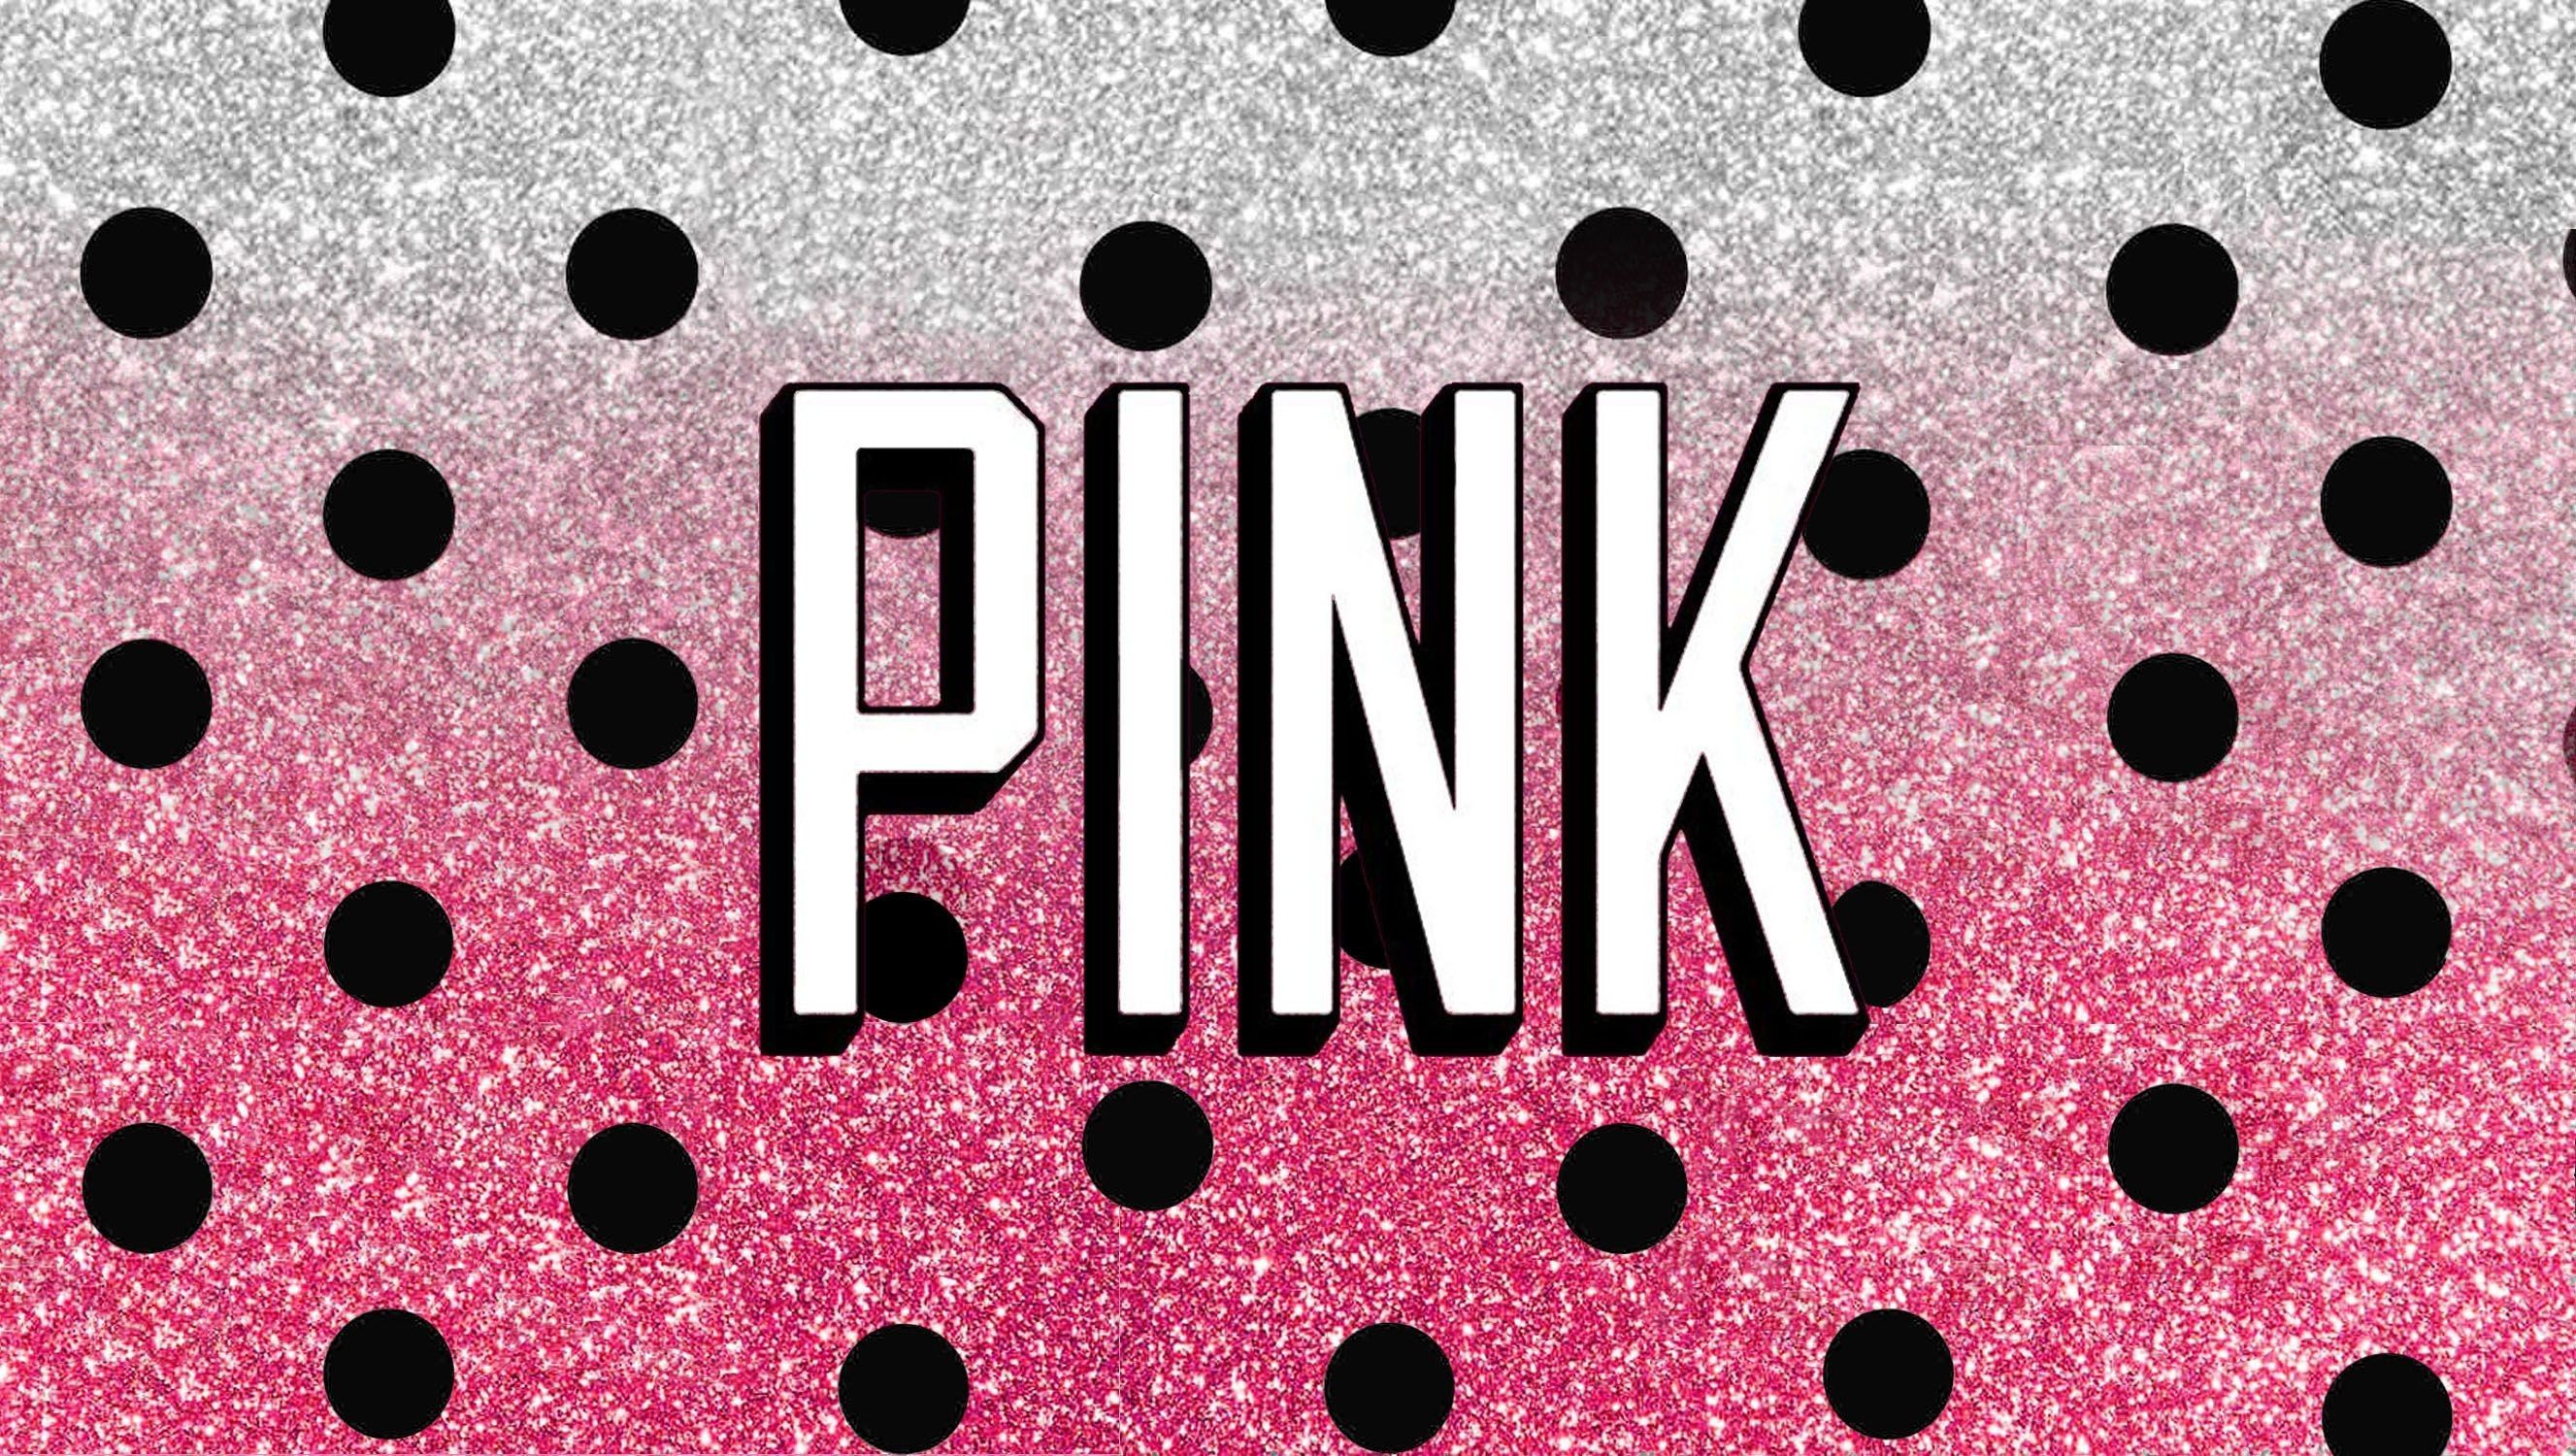 Pink Brand Wallpaper Free Pink Brand Background